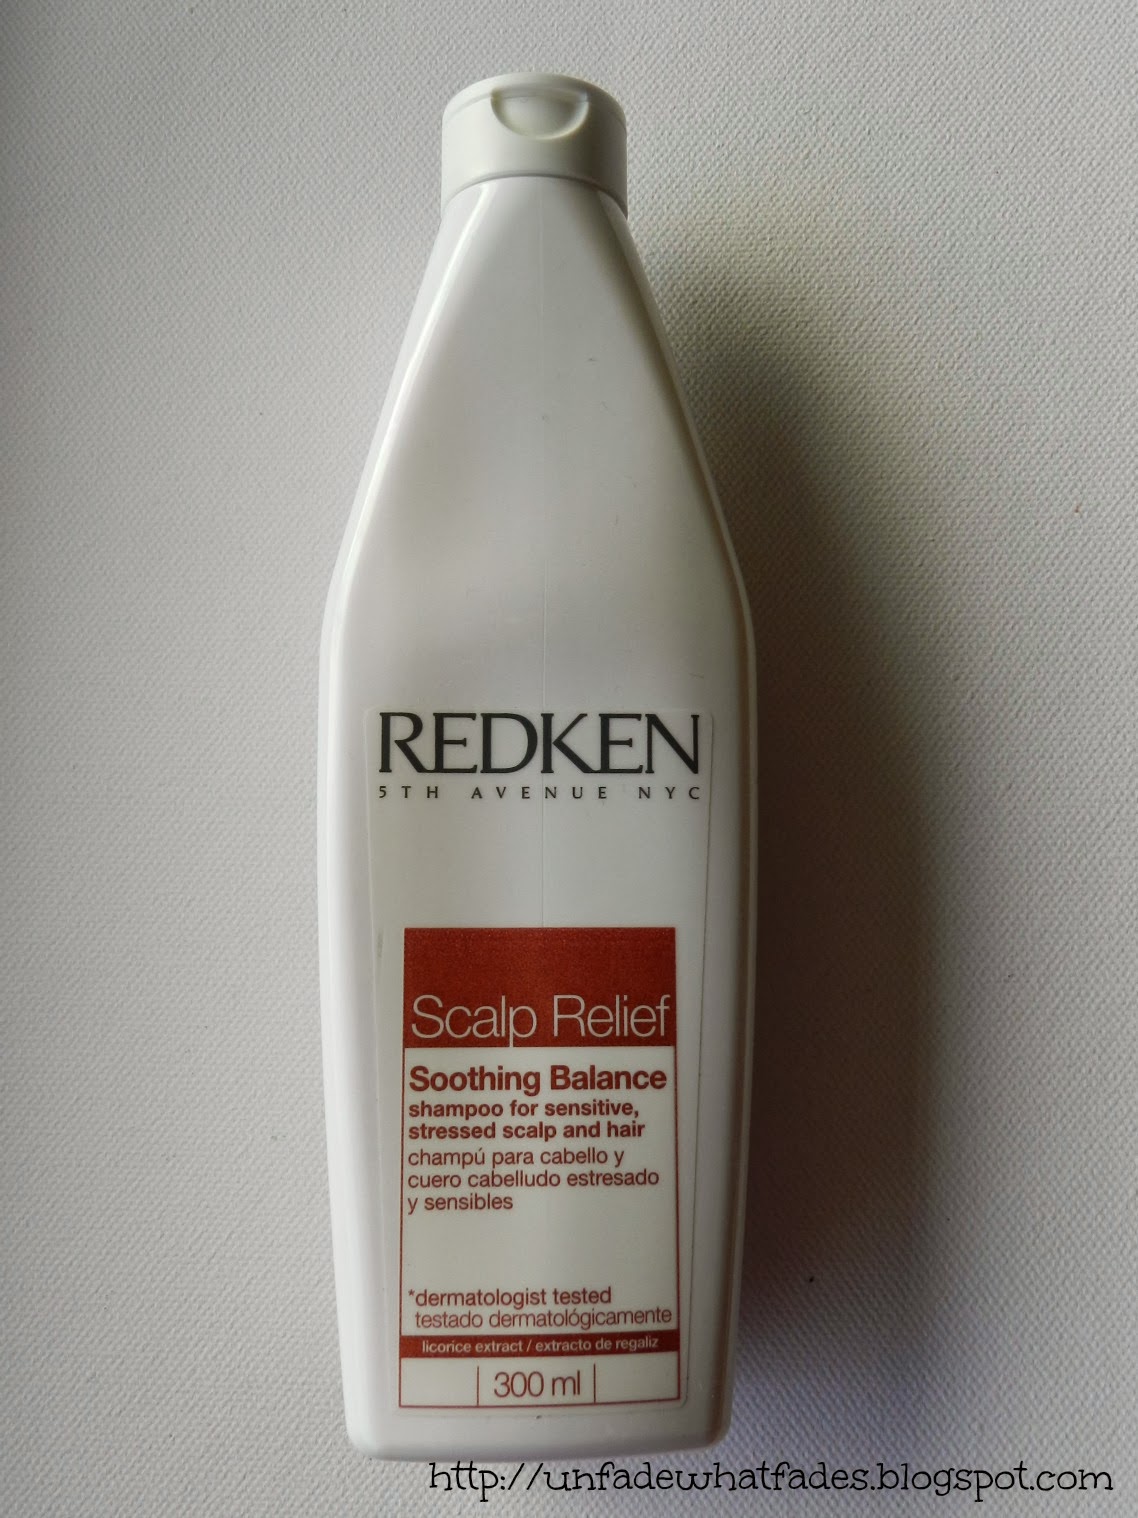 Unfade fades: Redken Scalp Soothing Balance Shampoo review